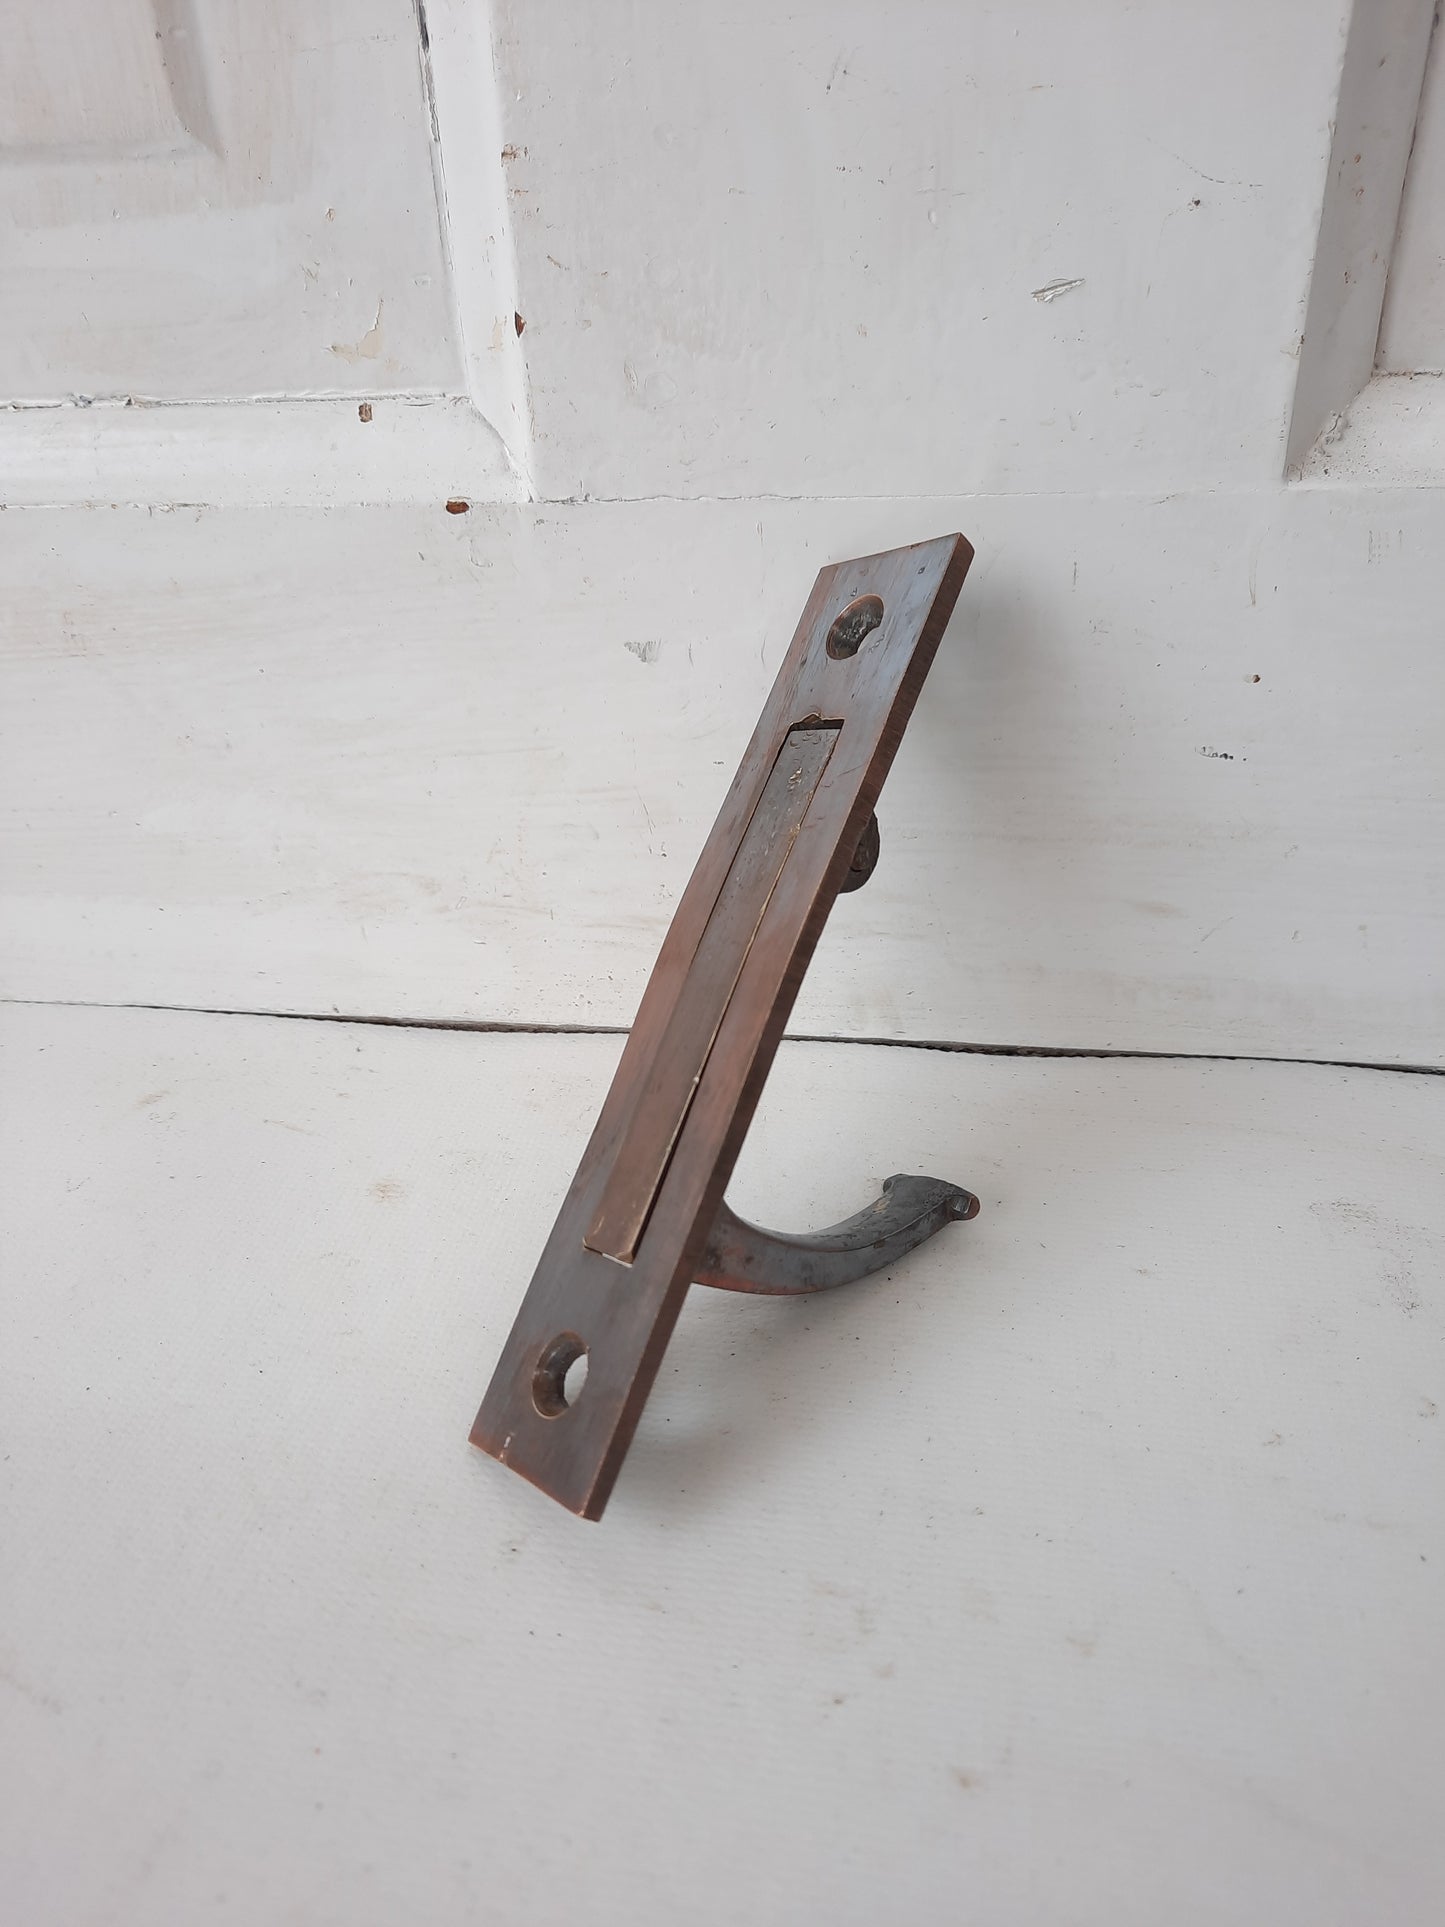 Antique Bronze Pocket Door Pop-Out Handle or Pull, Swing Out Sliding Door Pull Handle 013101